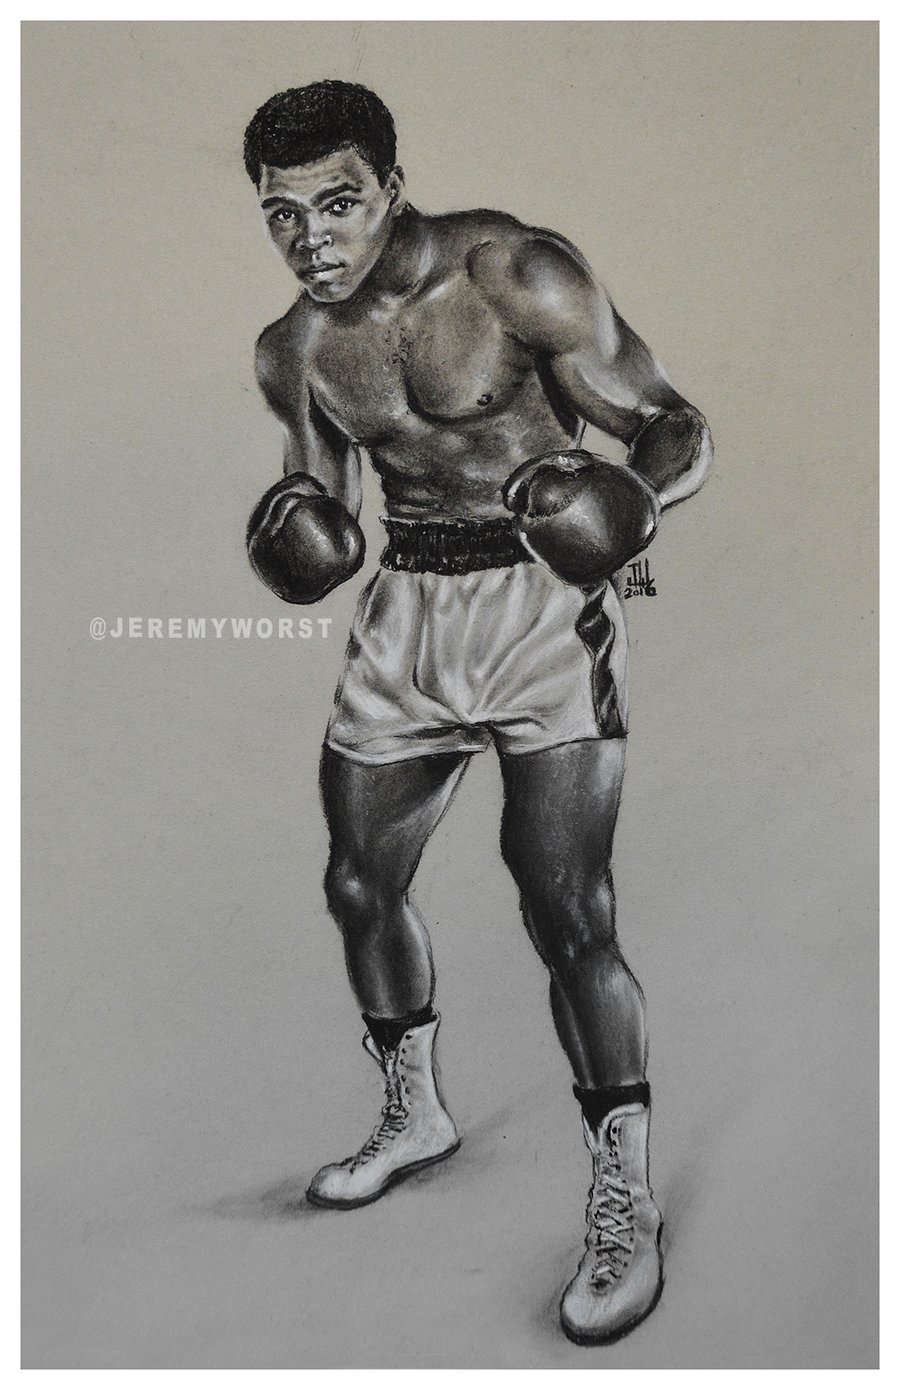 Image of JEREMY WORST " Muhammad Ali " Sketch Artwork ebay etsy Fine Art boxing Cassius Clay